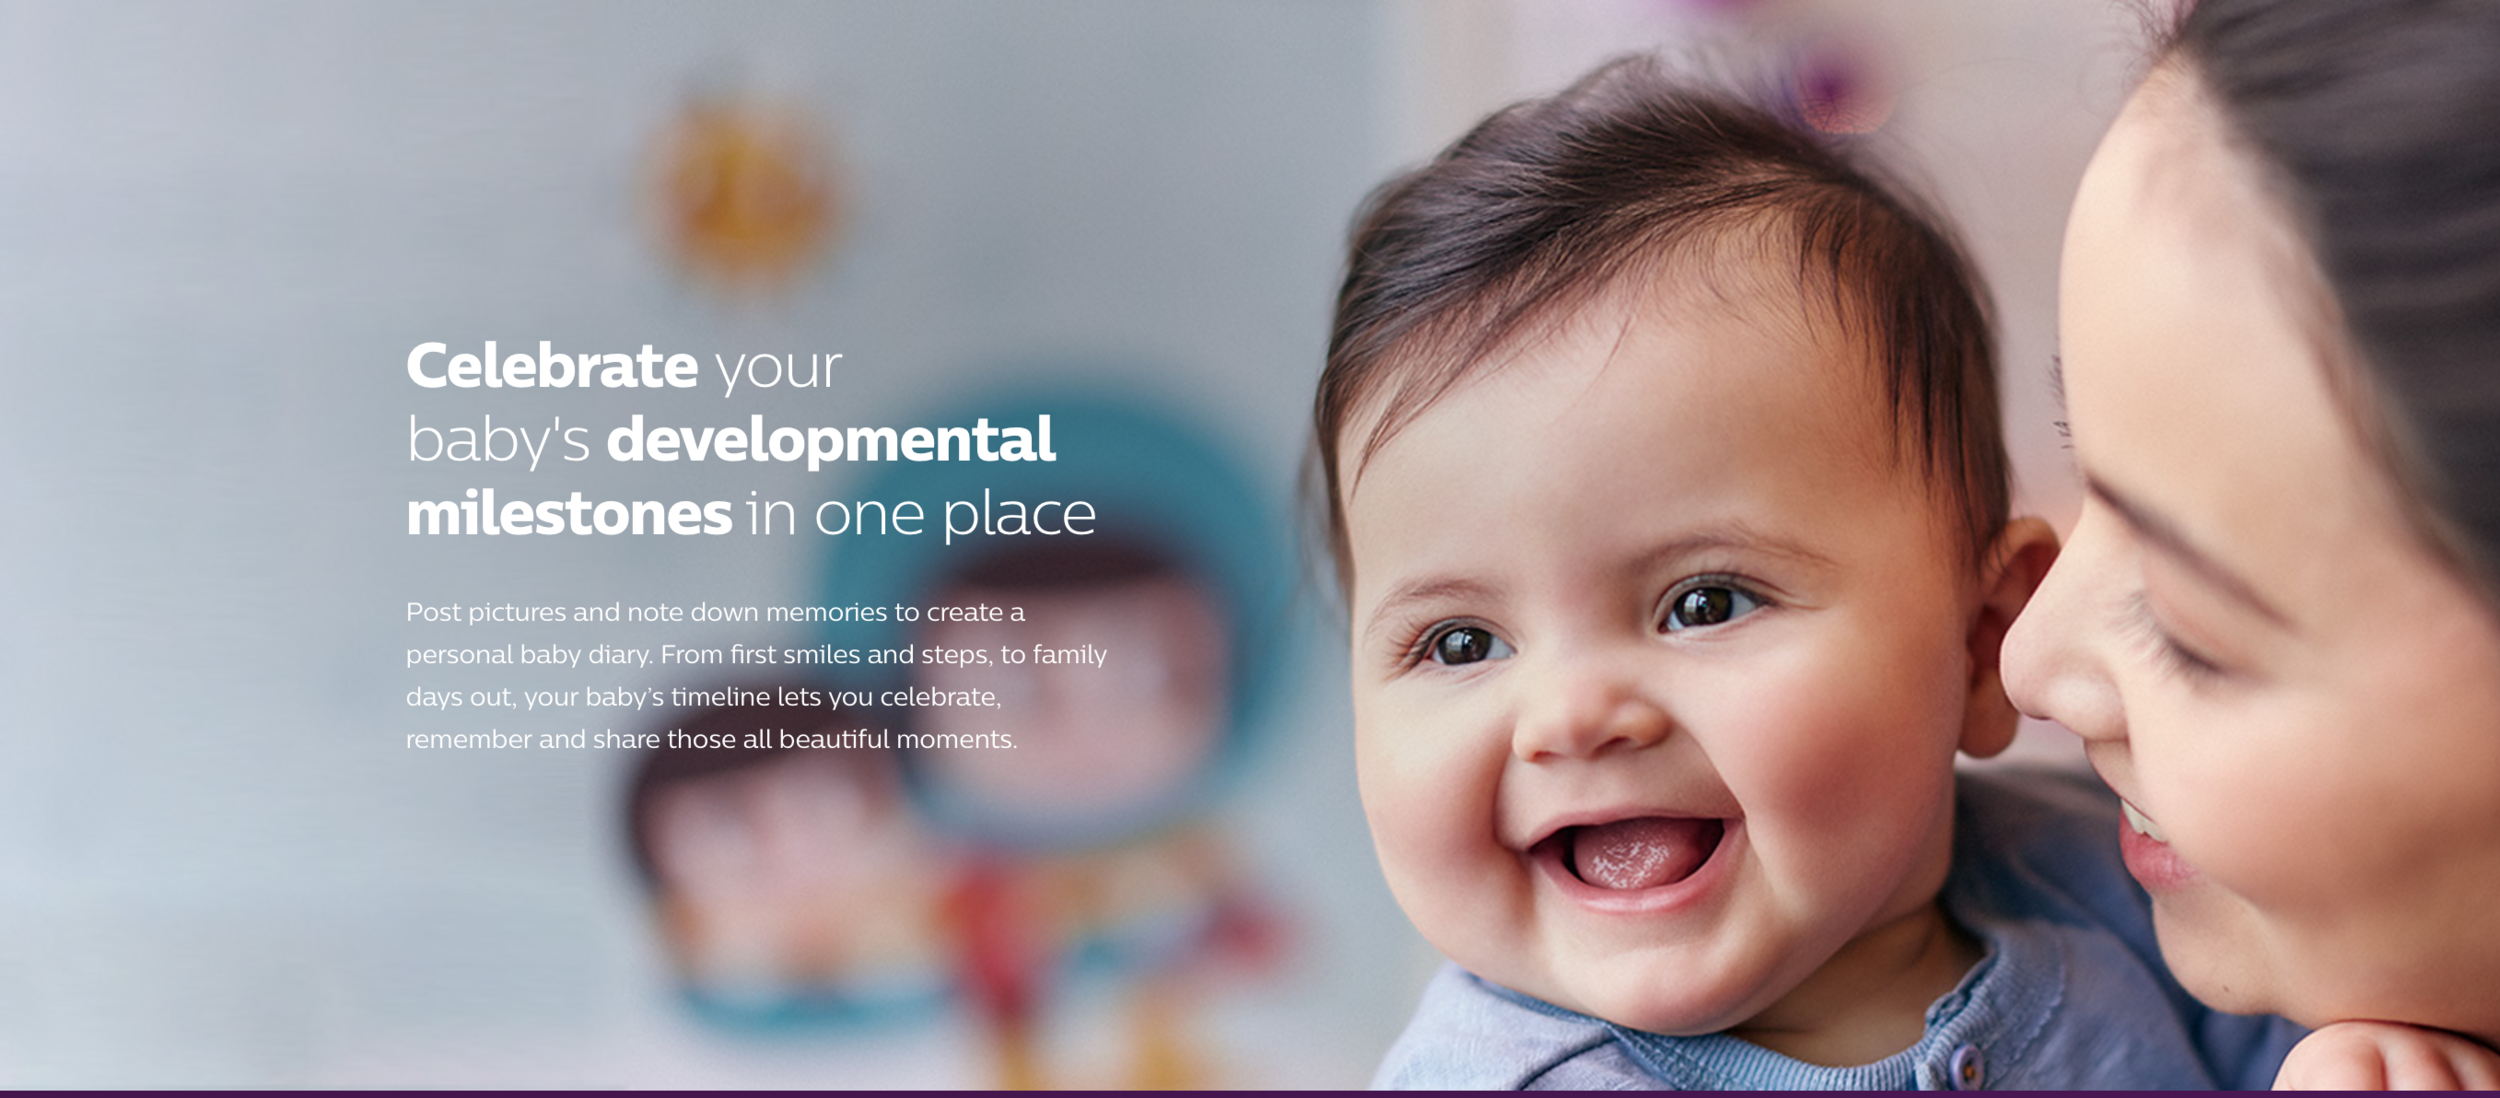 2 Baby development app Avent uGrow   Philips.png